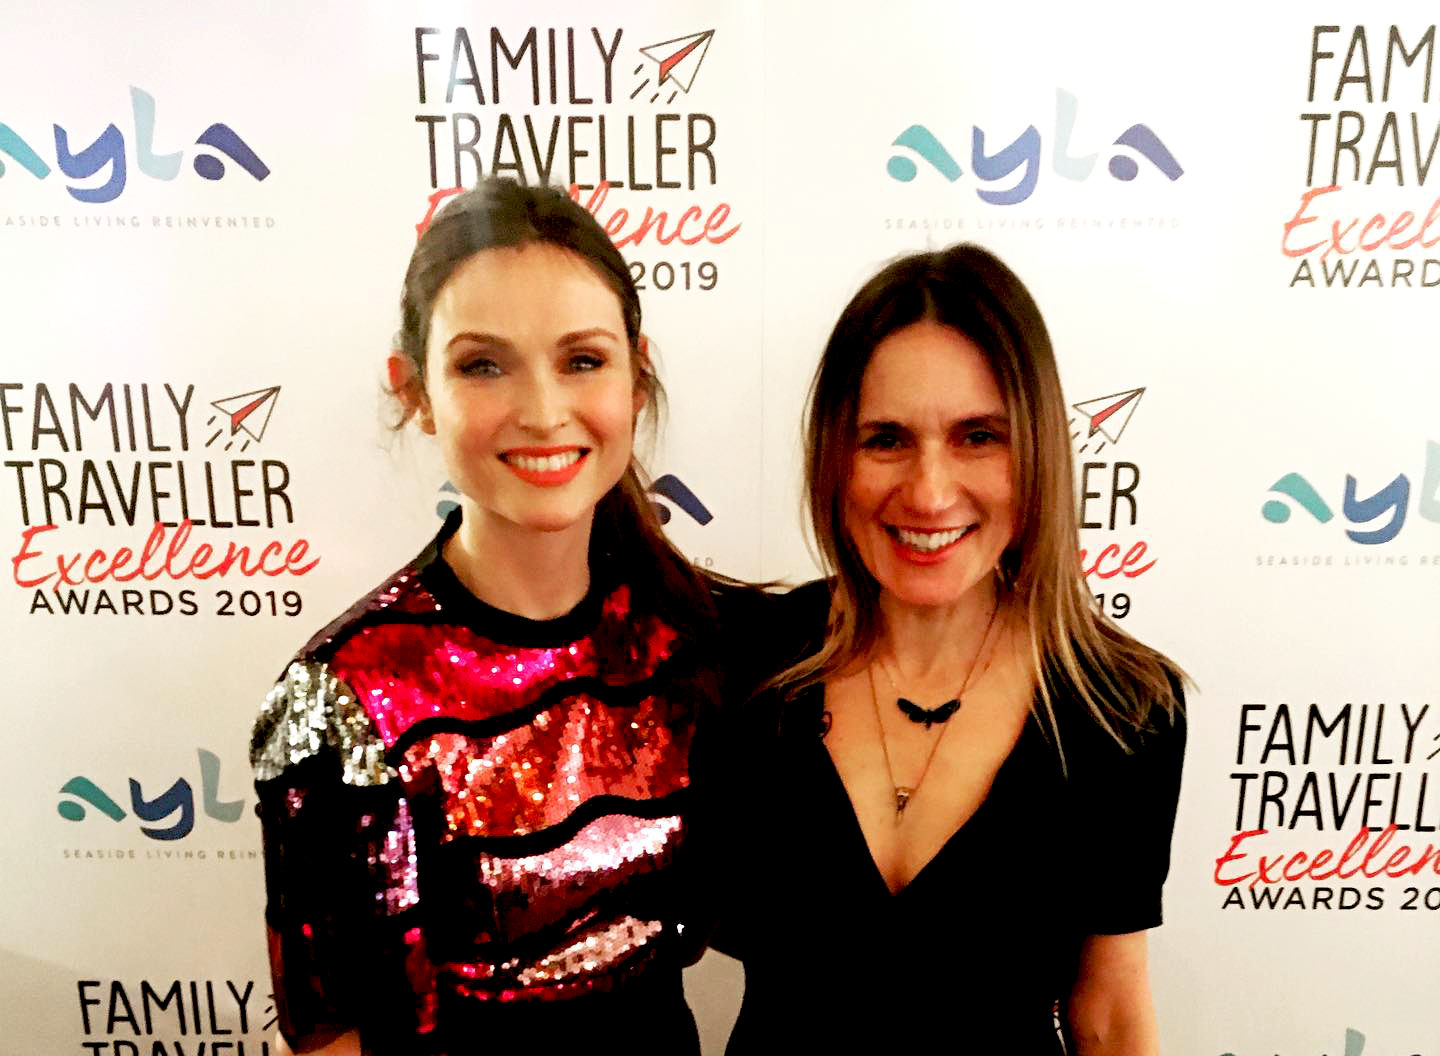 Family Traveller Excellence Awards 2019